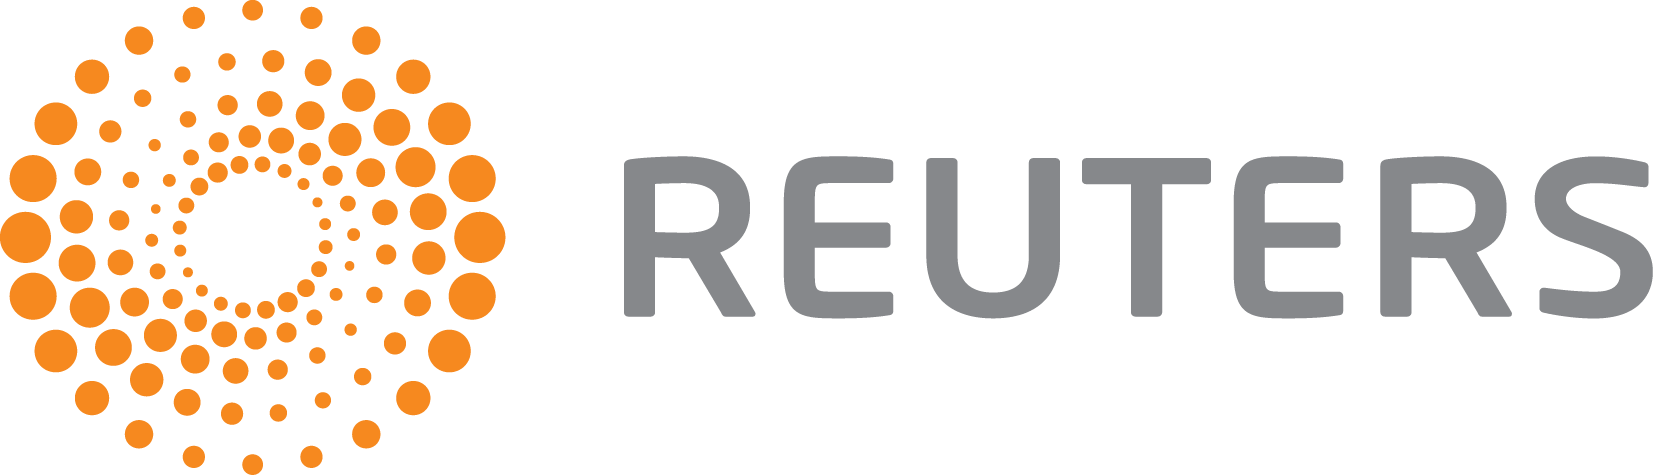 reuters_logo_transparent_lg